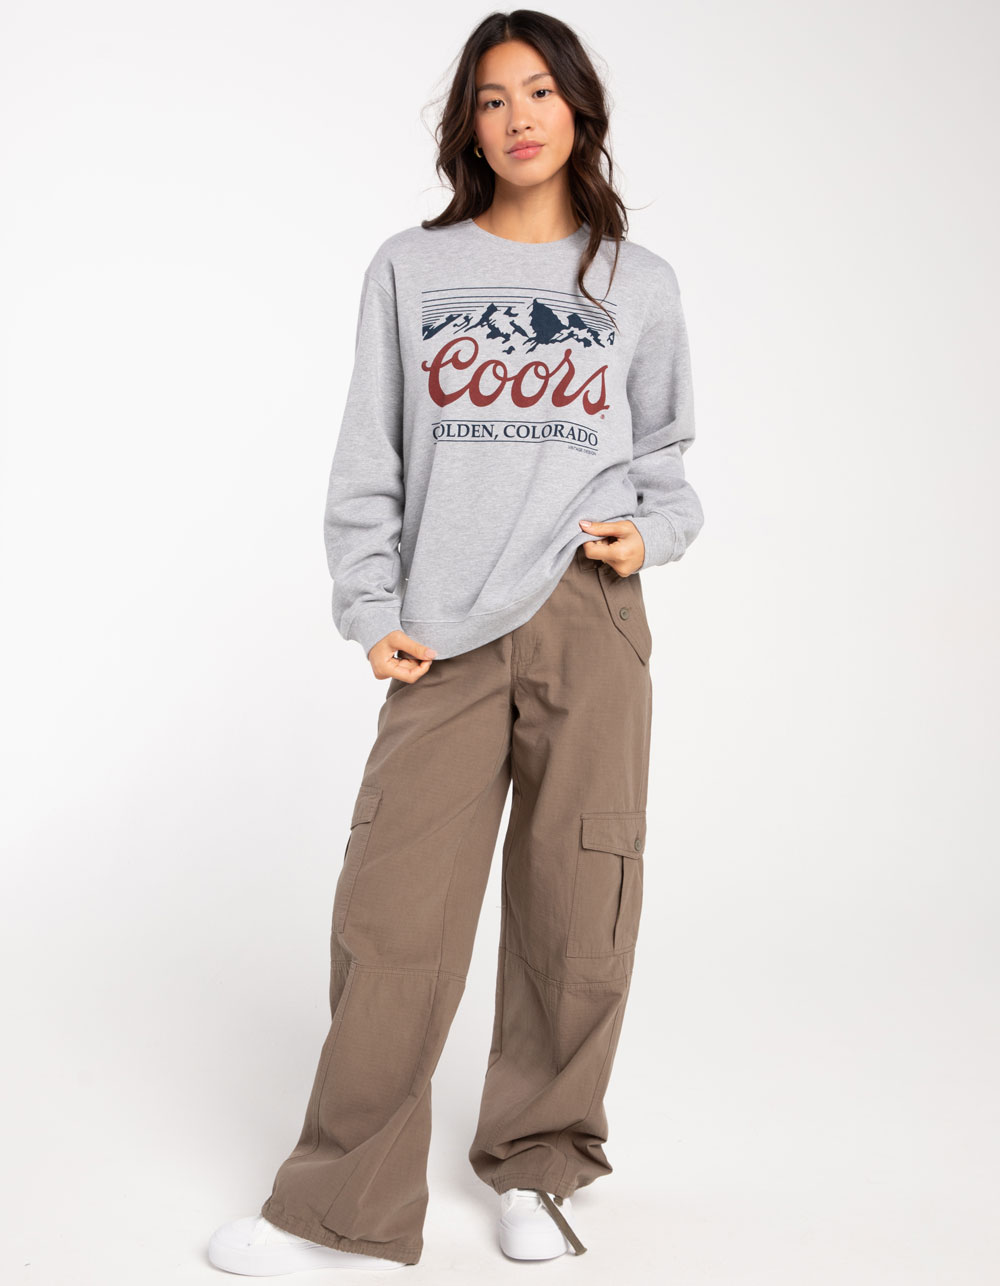 BREW CITY Coors Womens Crewneck Sweatshirt - HEATHER GRAY | Tillys